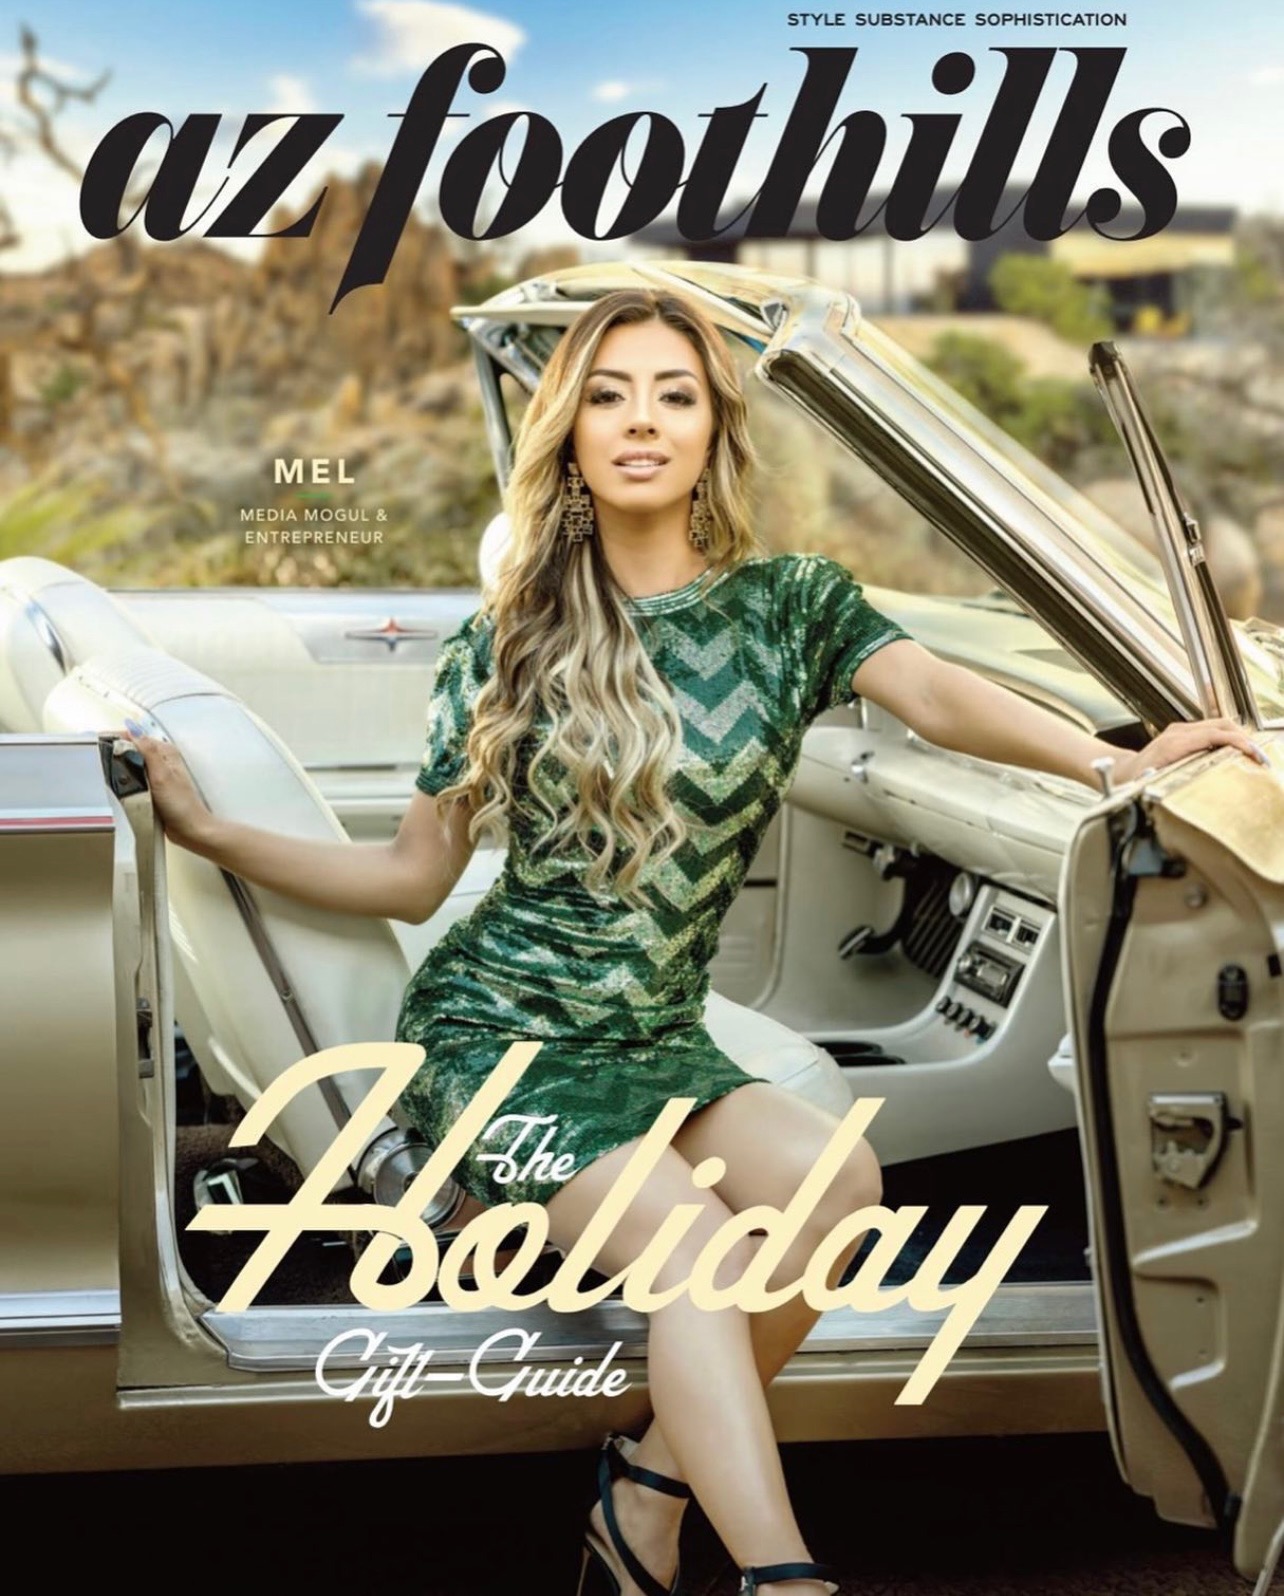 az foothills magazine